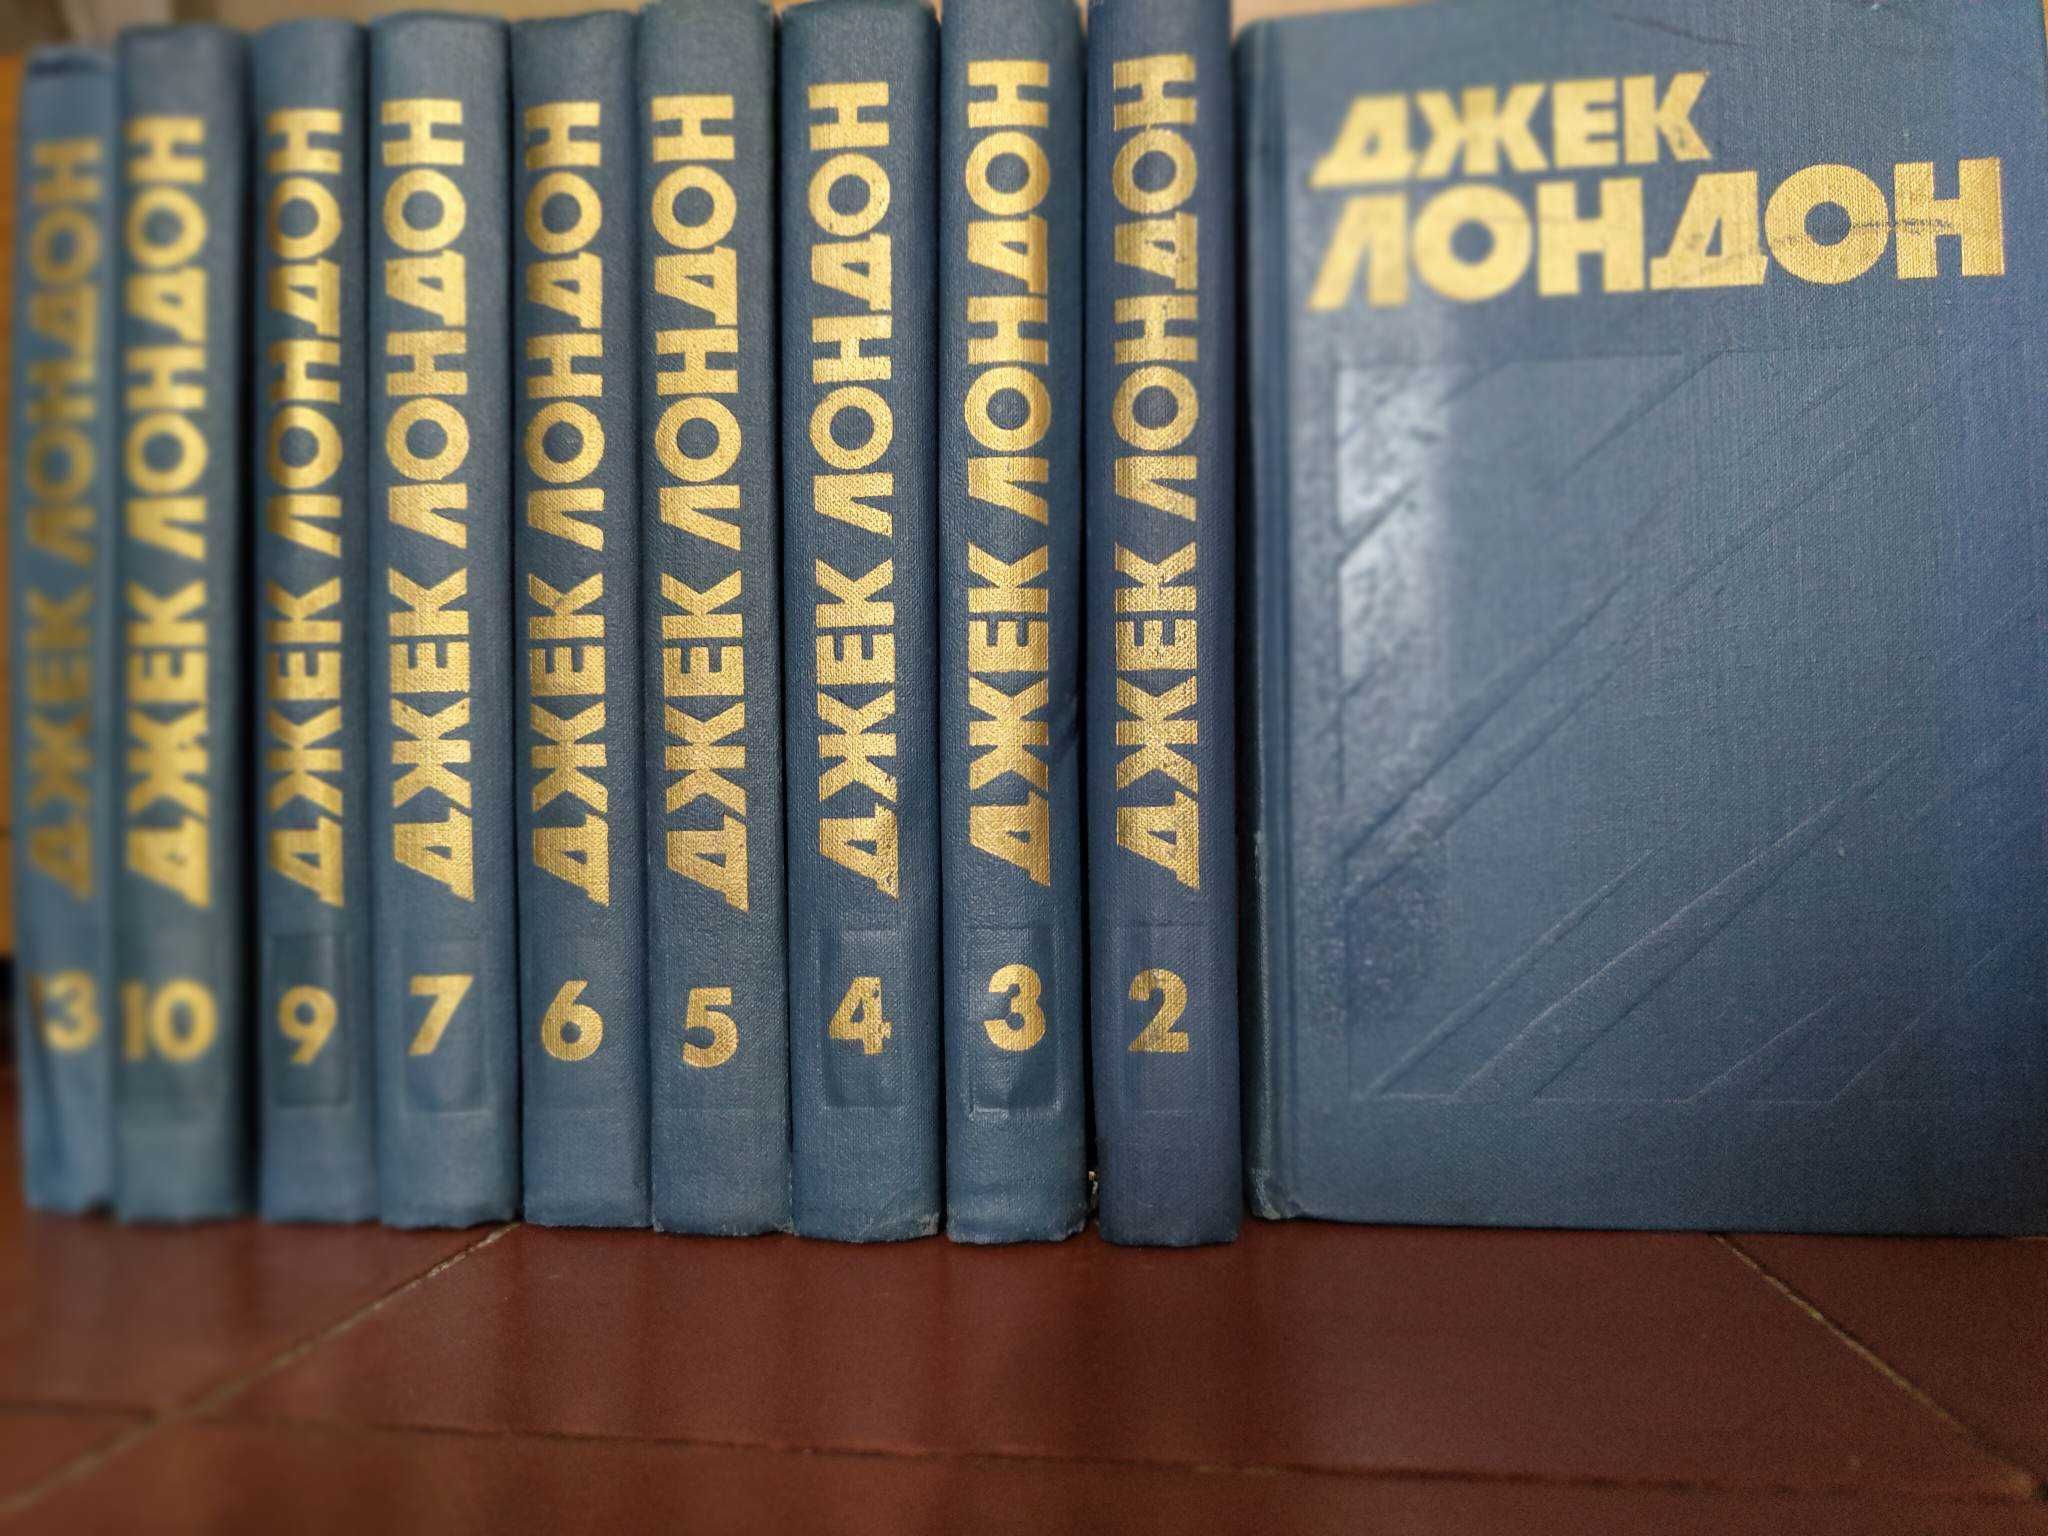 Джек Лондон 10 тома на руски език